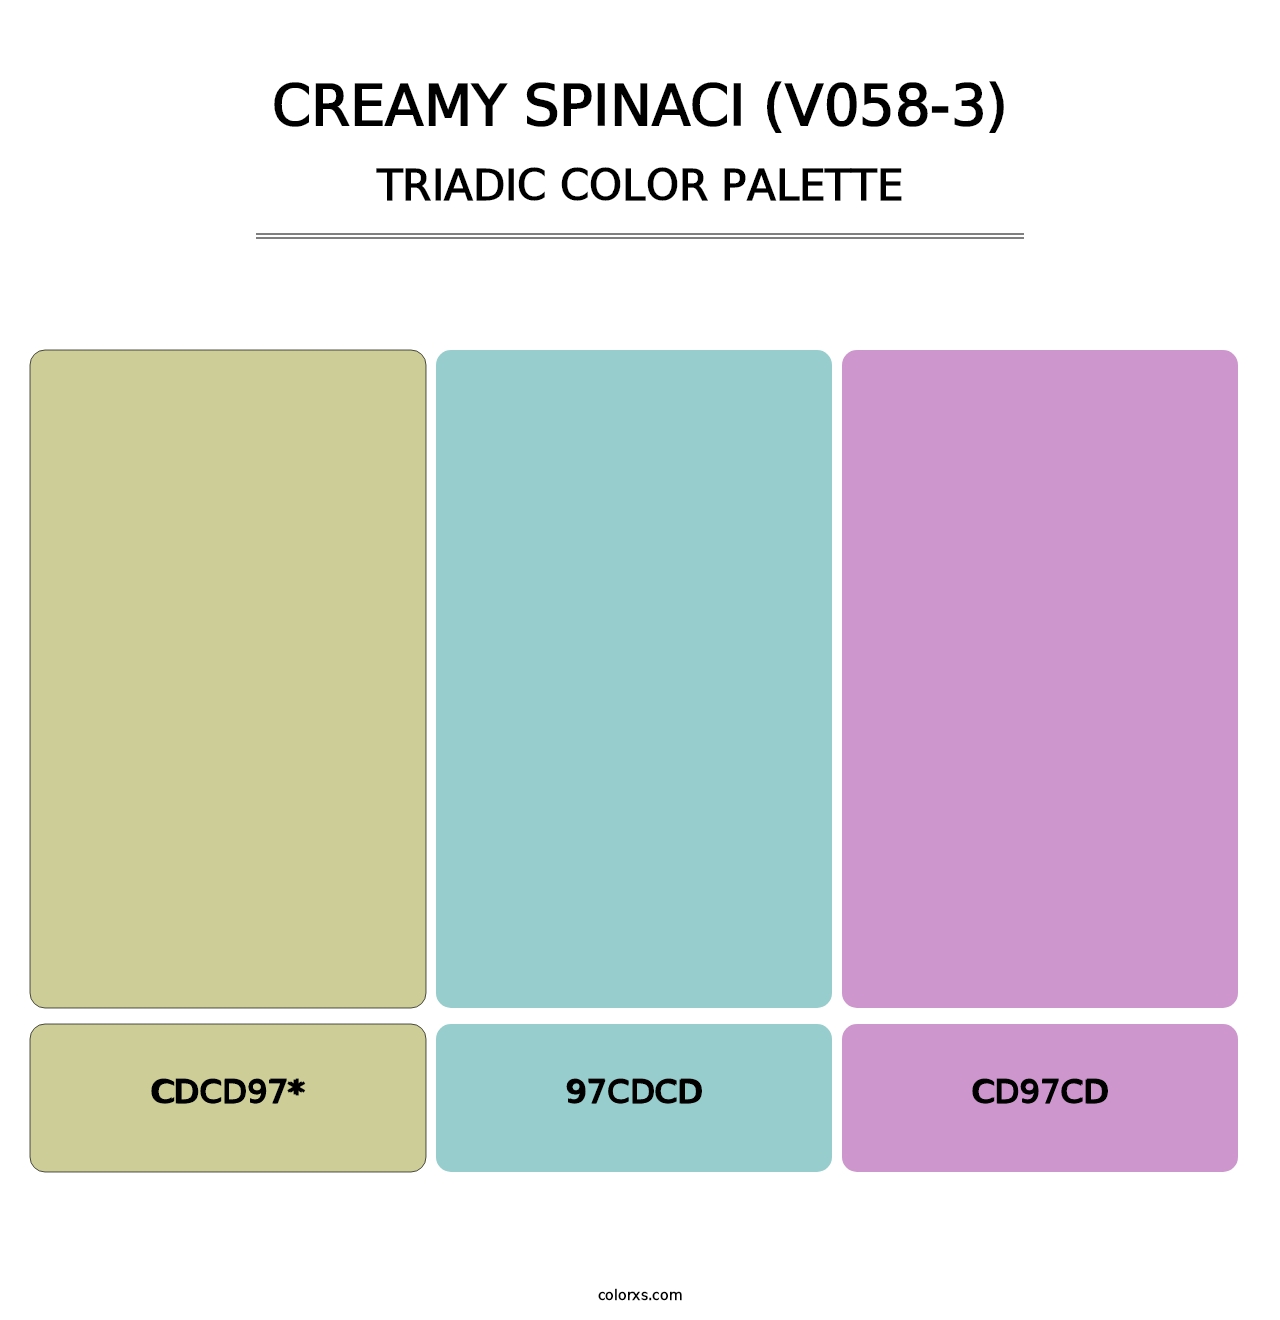 Creamy Spinaci (V058-3) - Triadic Color Palette